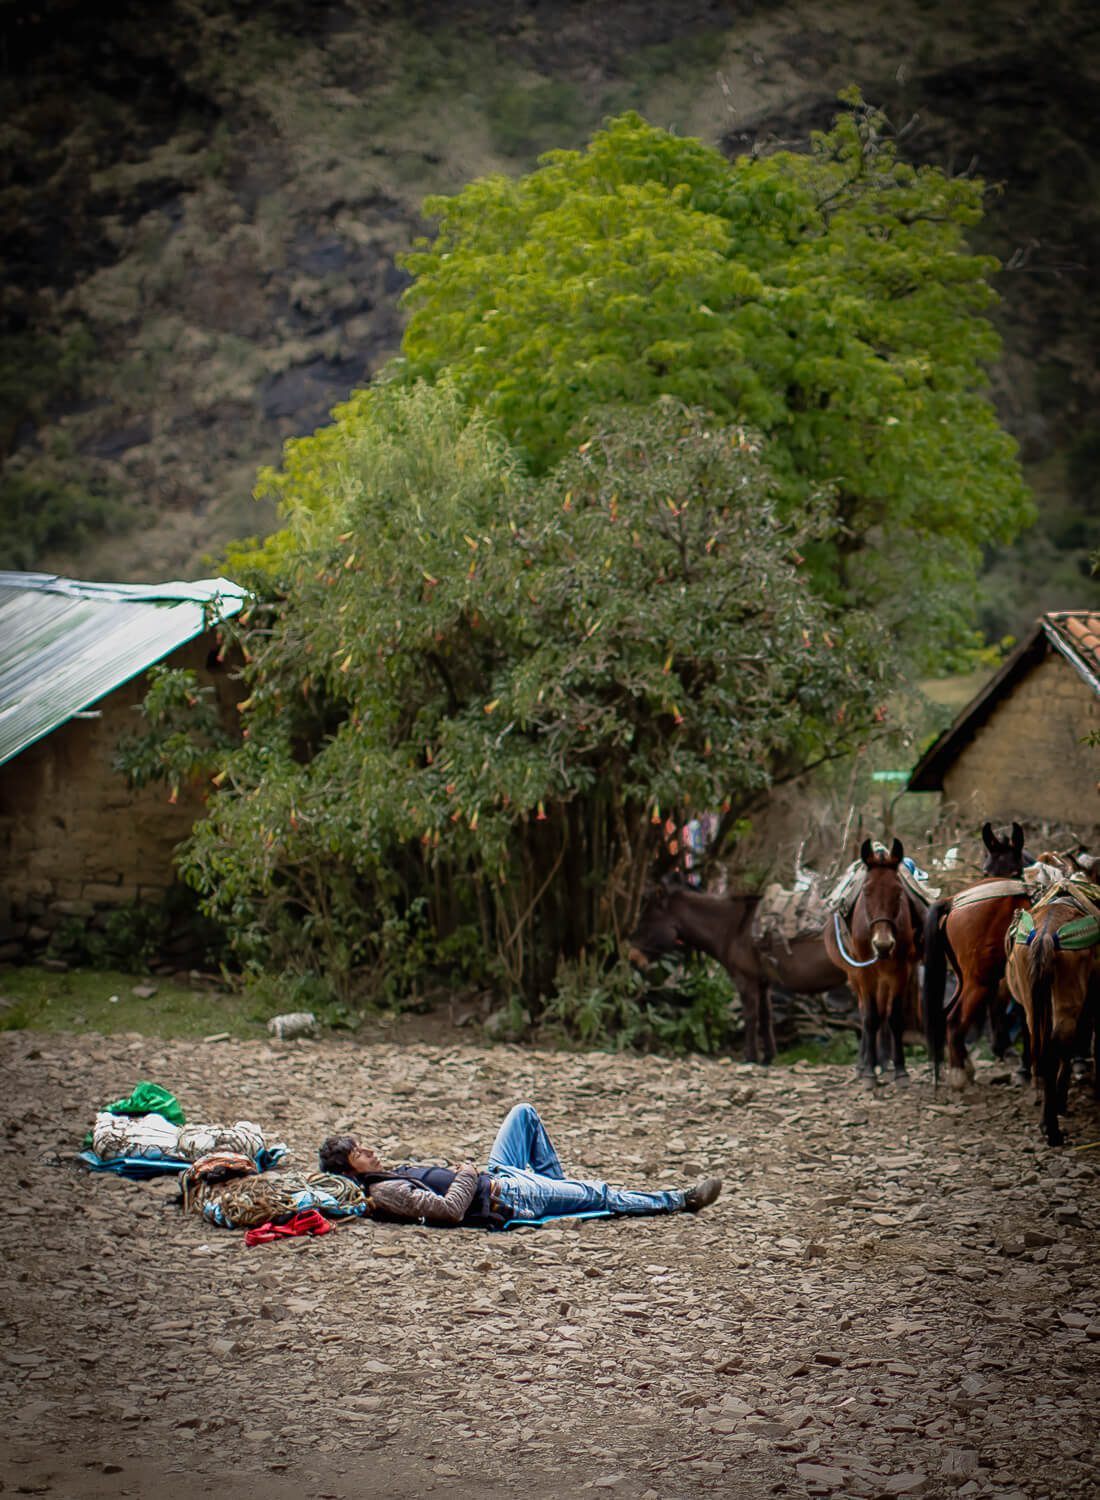 A man taking a siesta on the Salkantay Trail by Humantay Lake